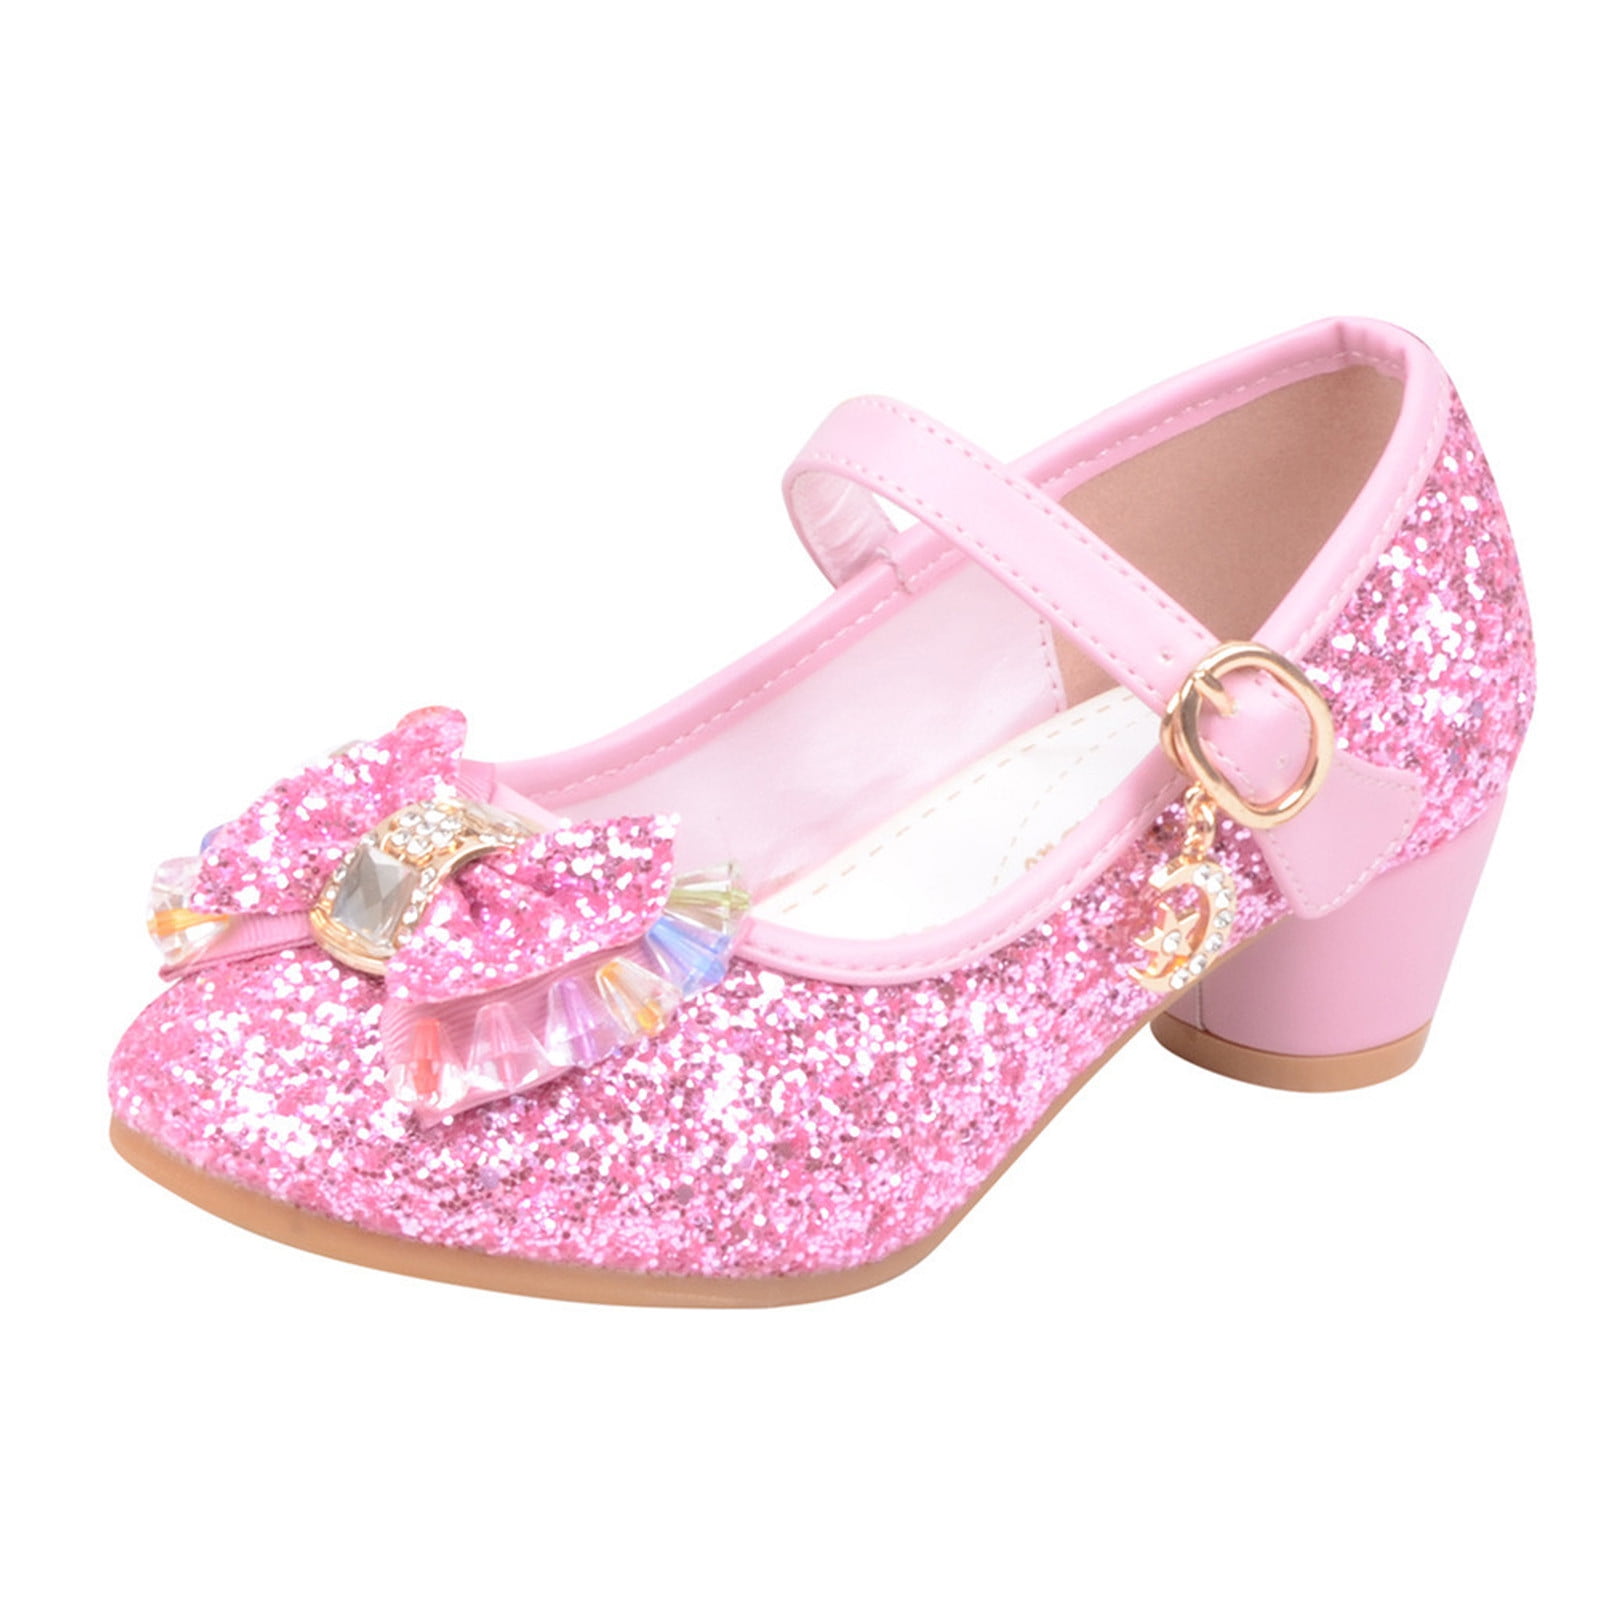 Kids Shoe Size 2 Baby Shoes Girls Single Bling Kids Baby Princess ...